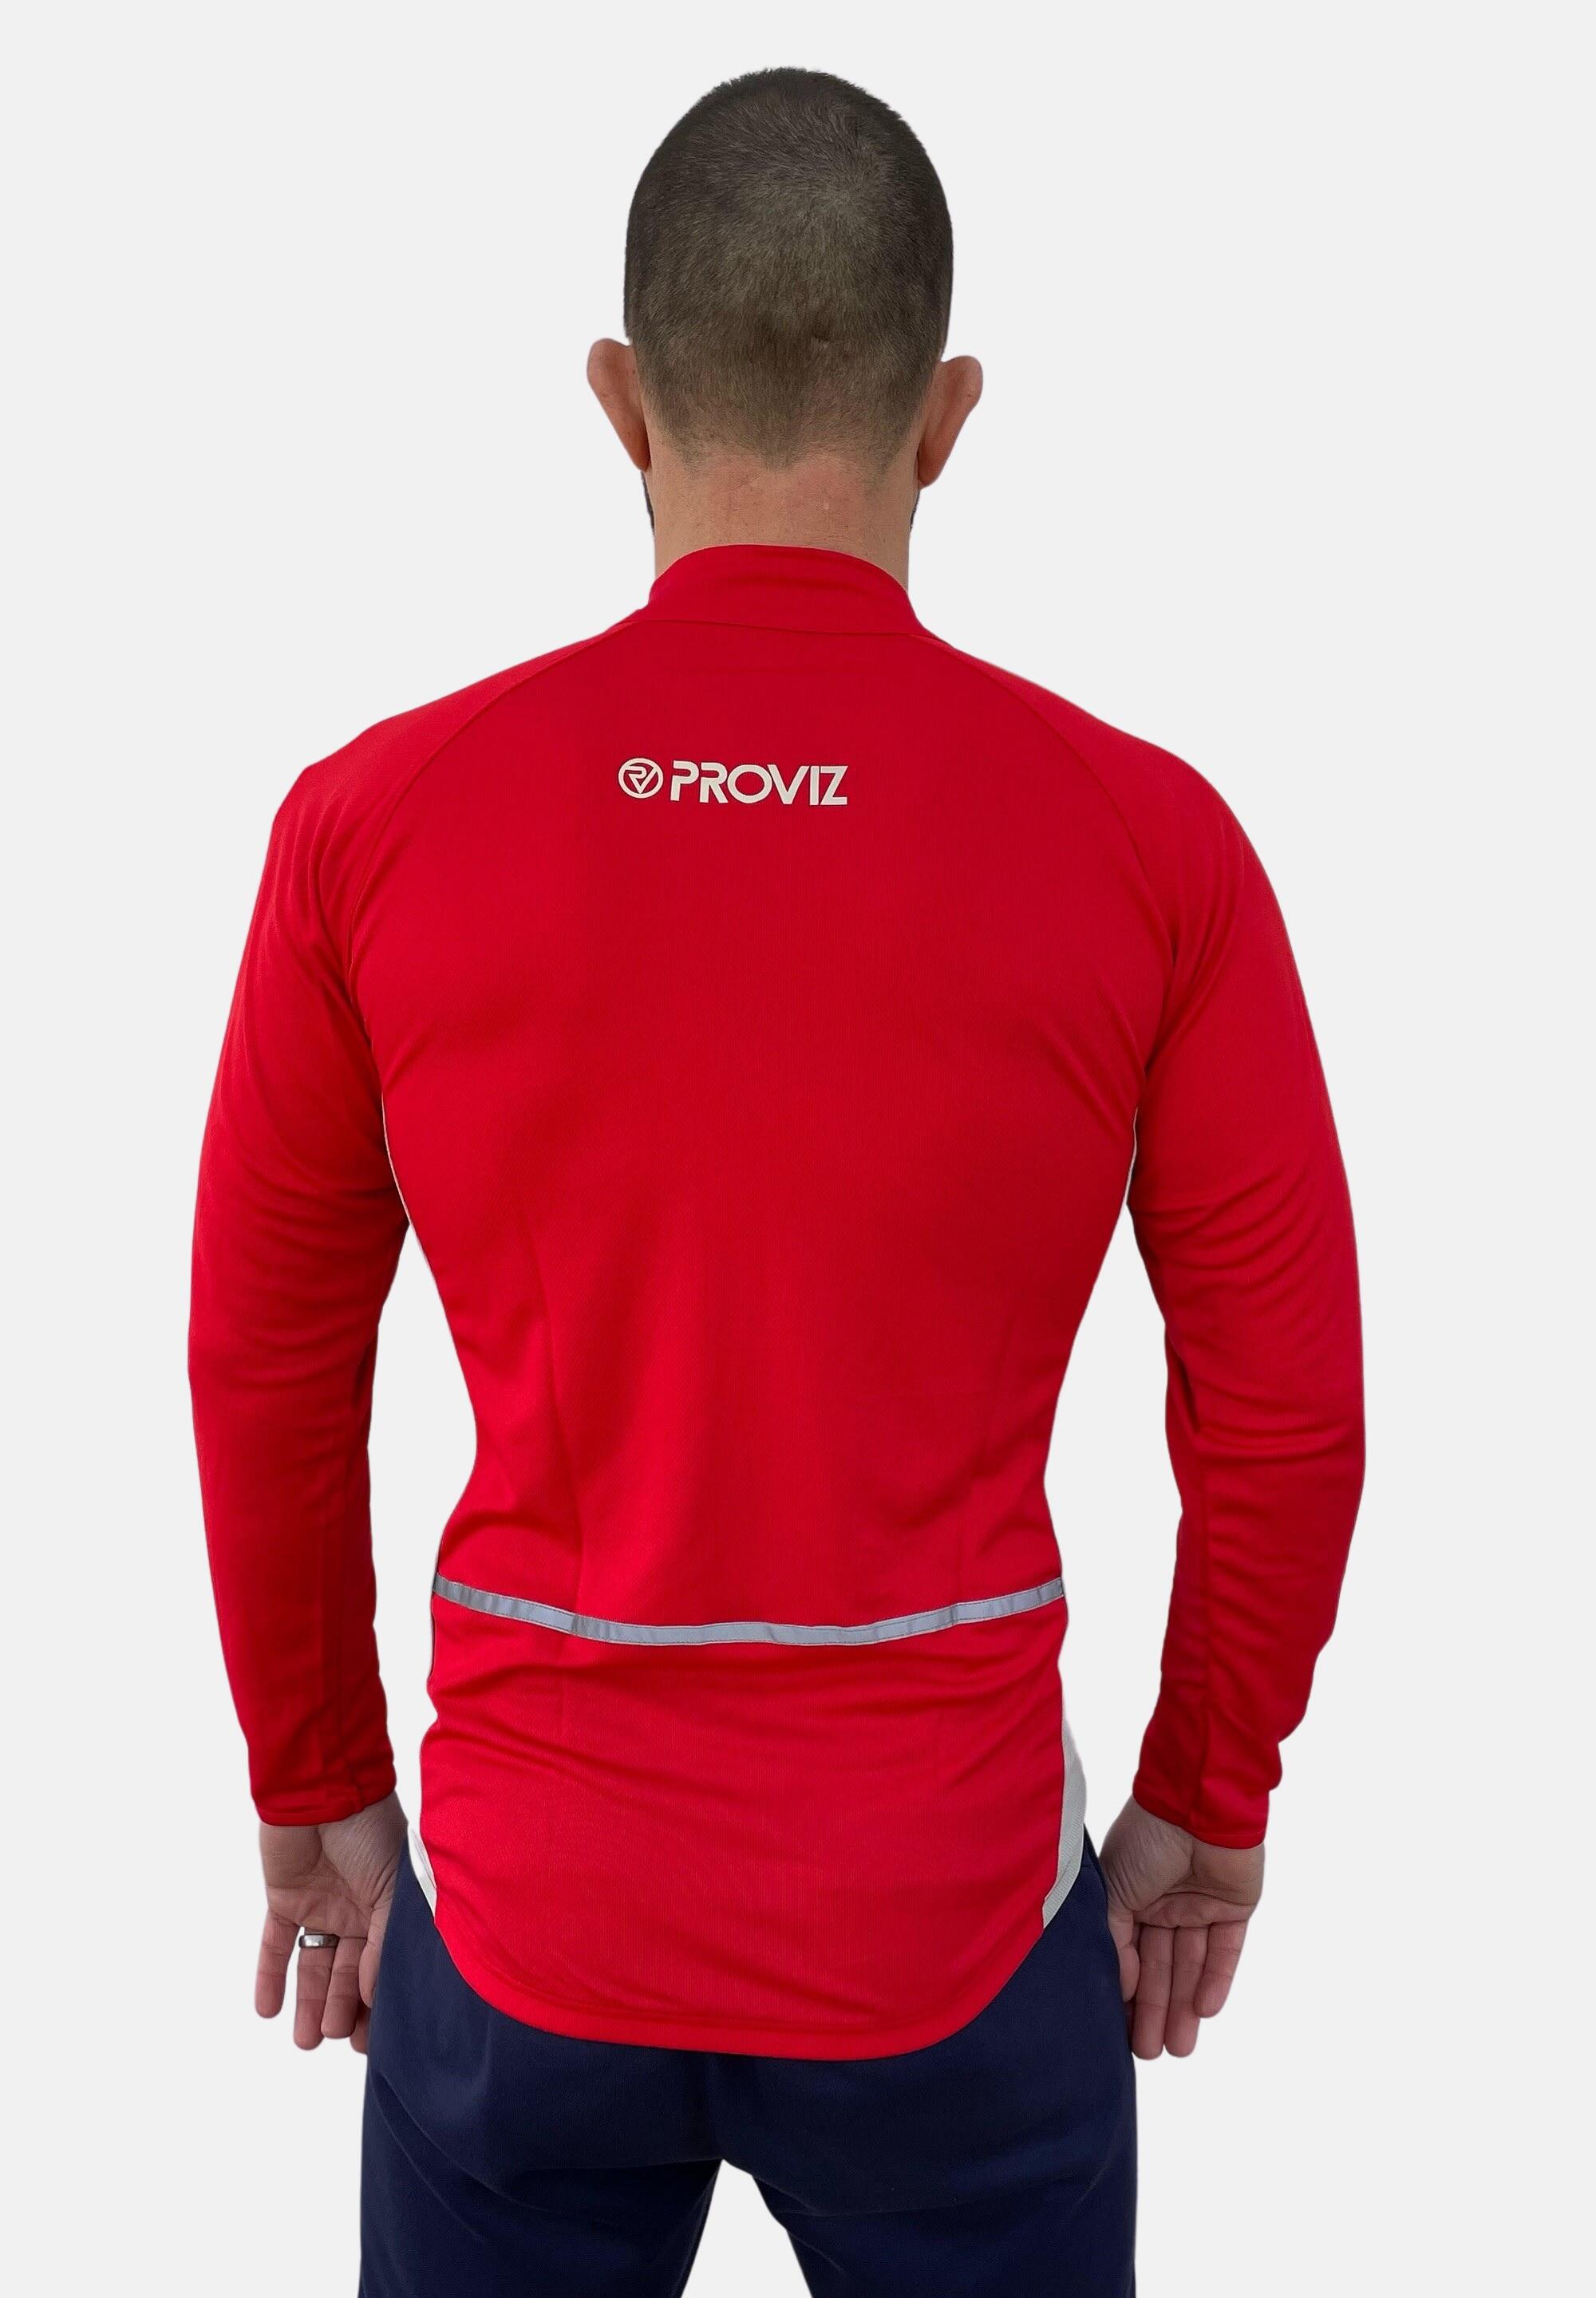 Proviz Classic Mens Sports T-Shirt Long Sleeve Reflective Activewear Top 4/7